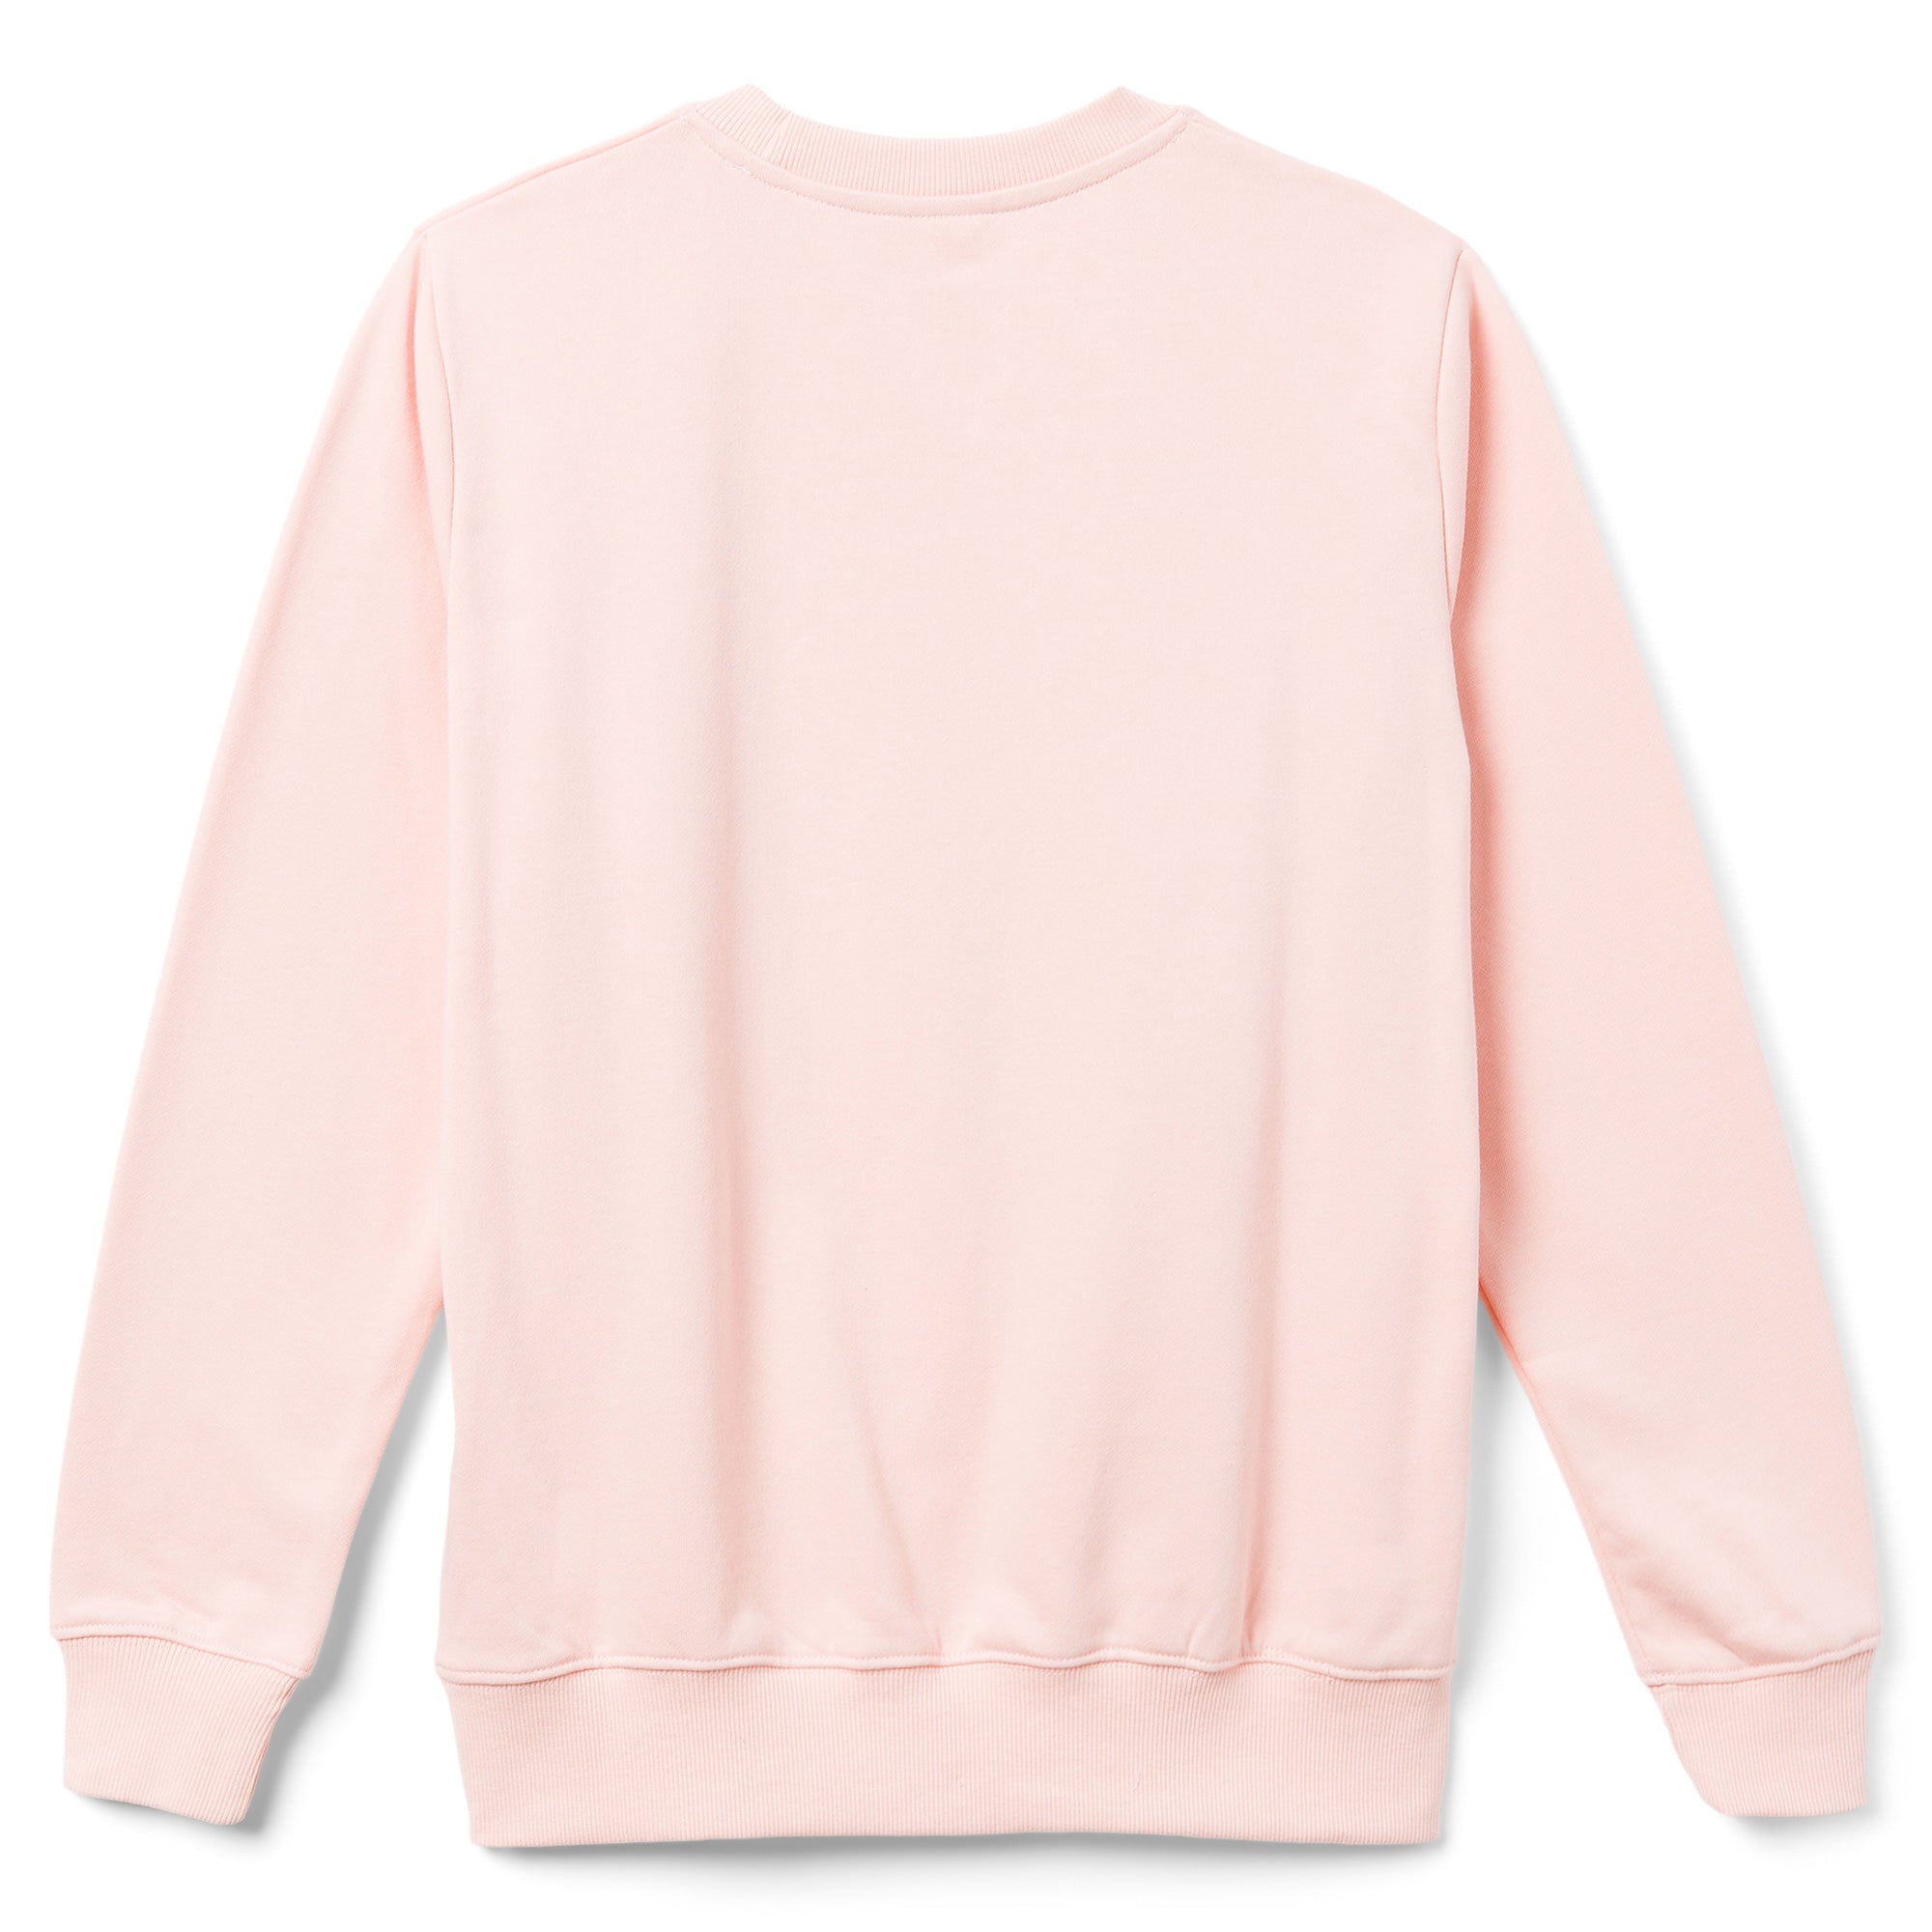 Hello Kitty & Mimmy Print Sweatshirt Pink Apparel Global License   